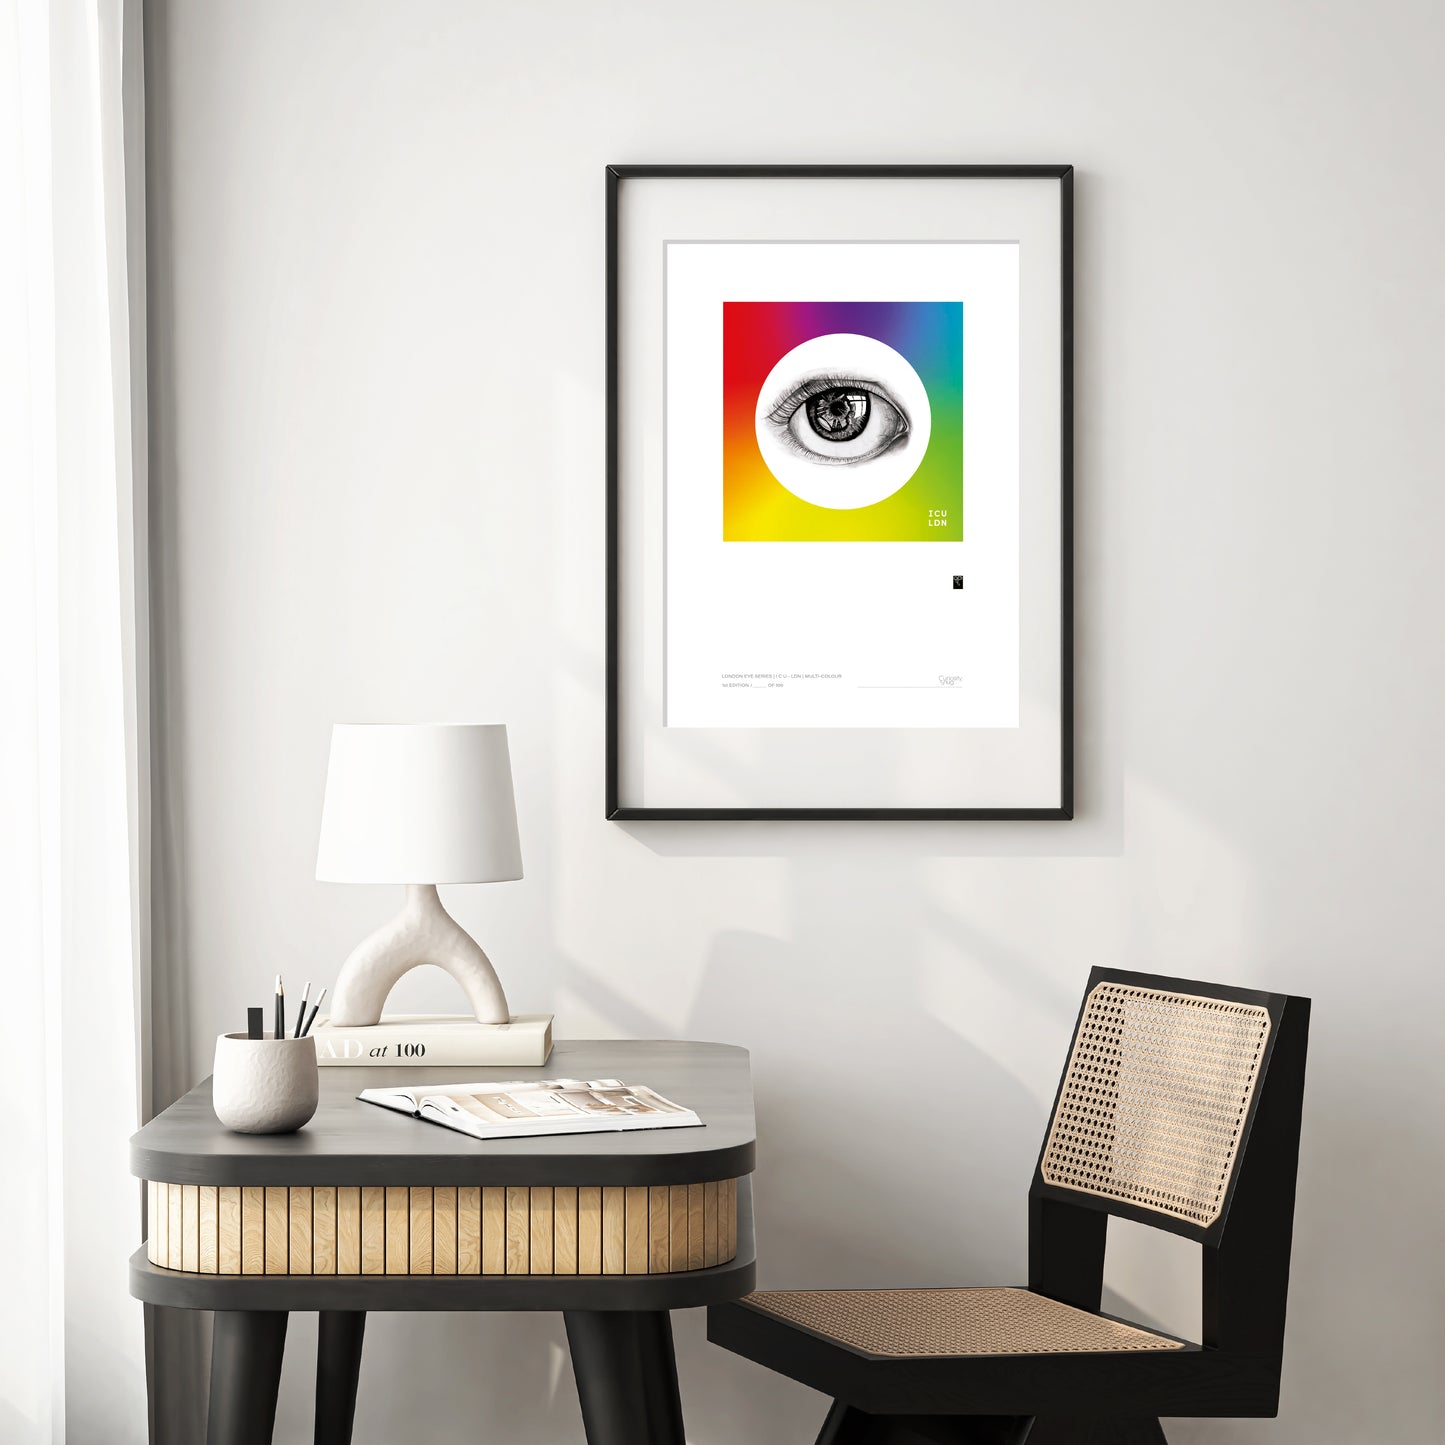 London Eye Series - I C U - LDN - Multi-Colour - Limited Edition Print